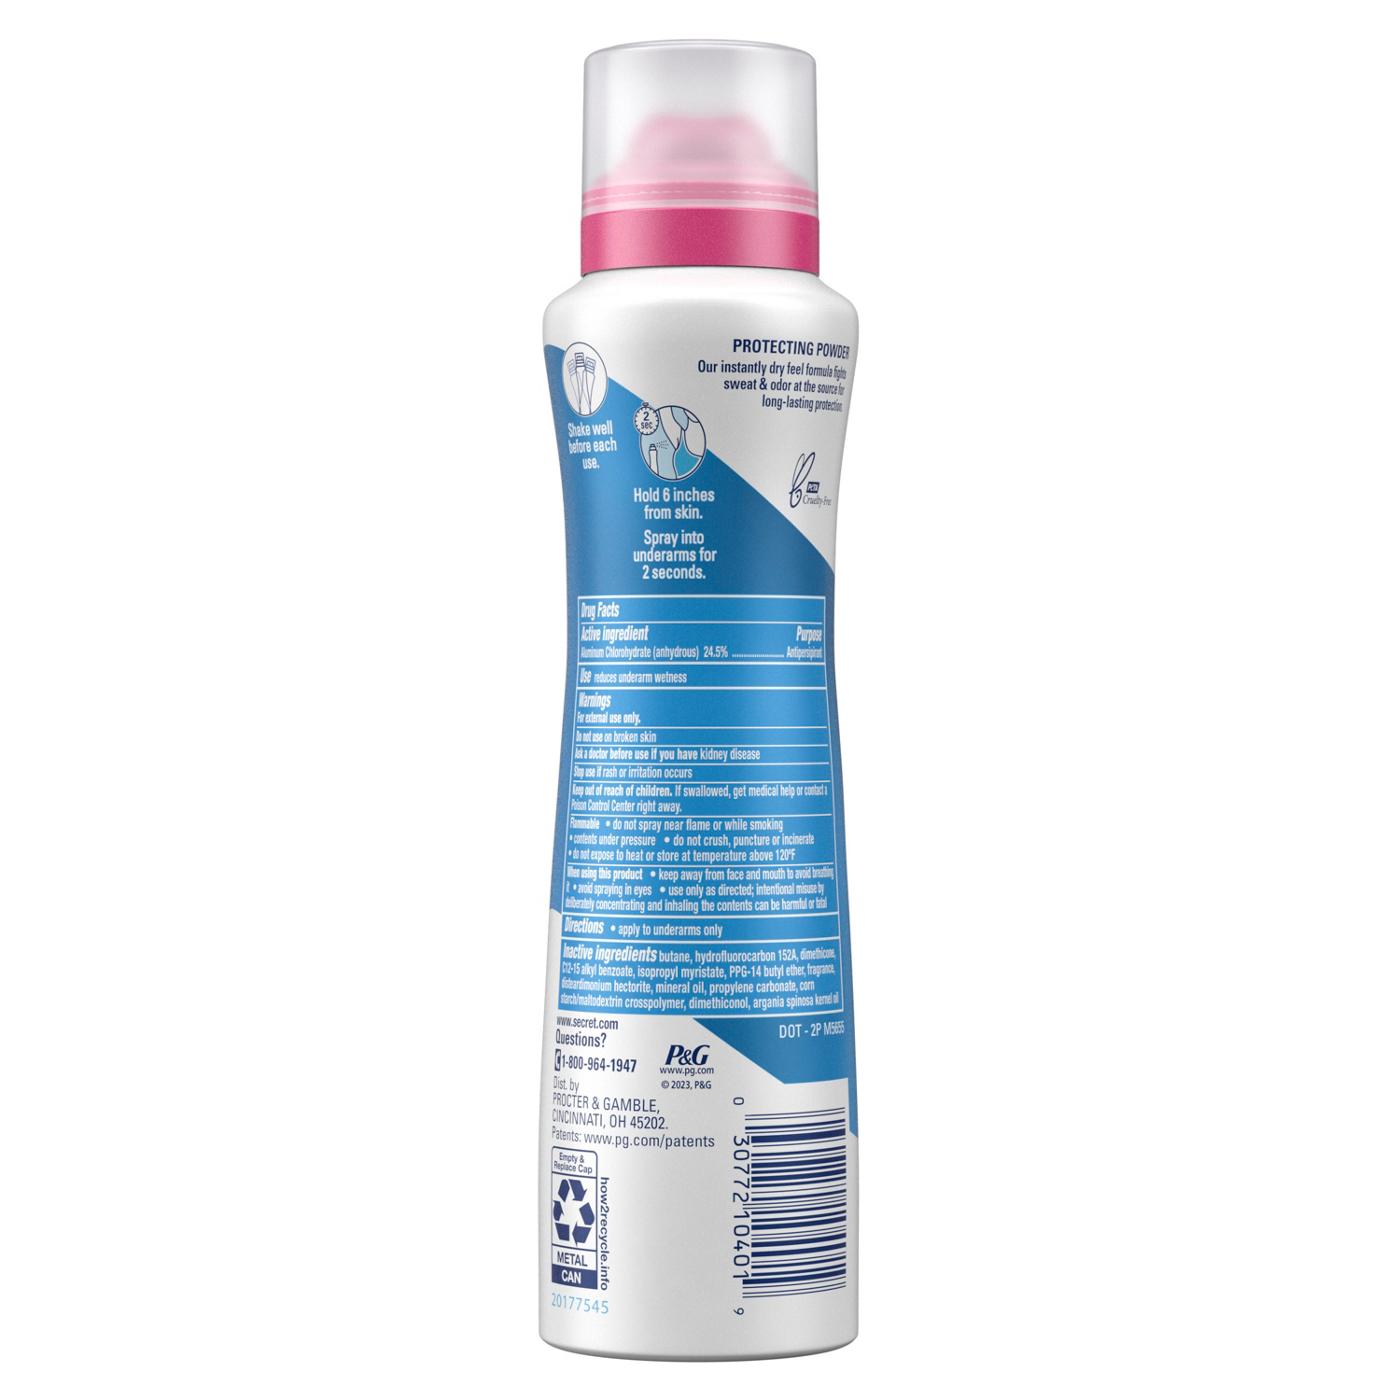 Secret Outlast Antiperspirant Deodorant Dry Spray - Protecting Powder; image 2 of 2